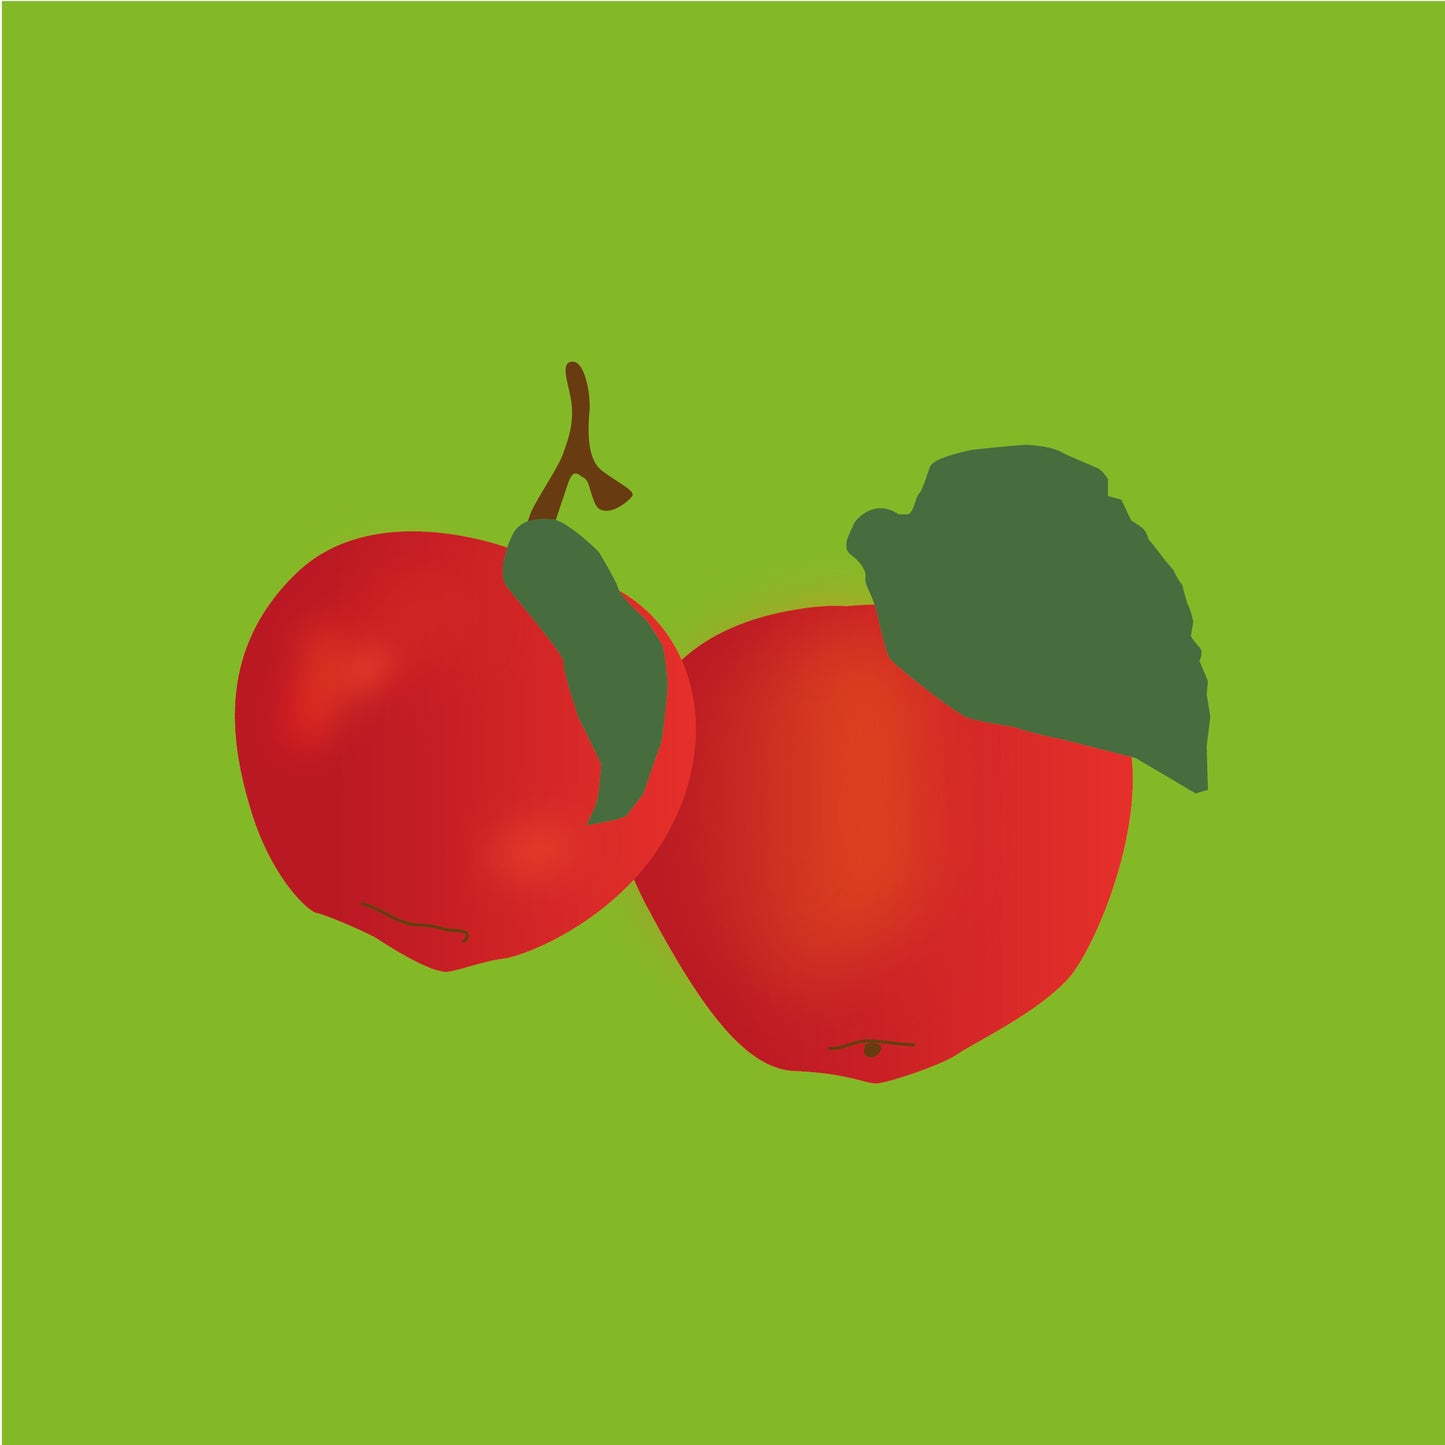 Biodynamic Organic Apples